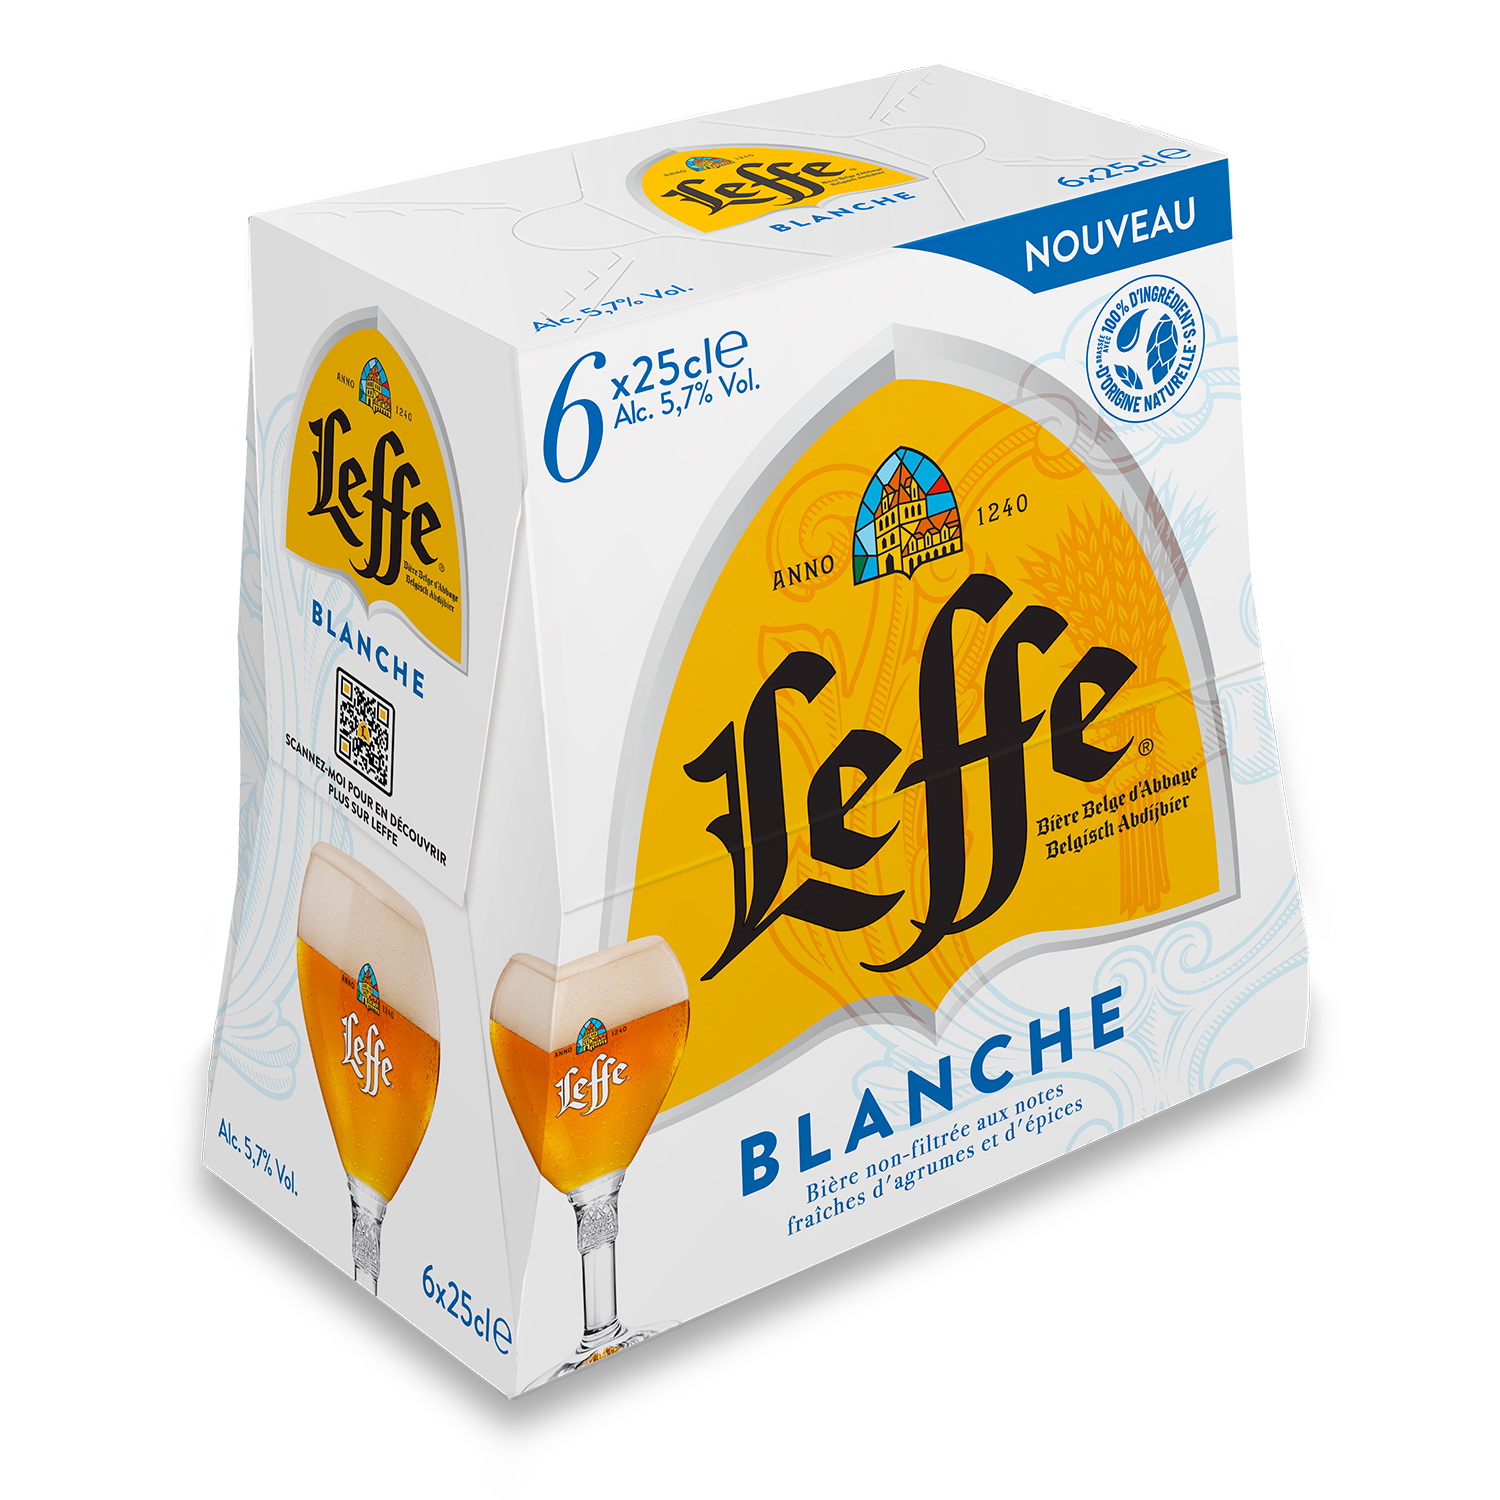 Leffe – Blanche